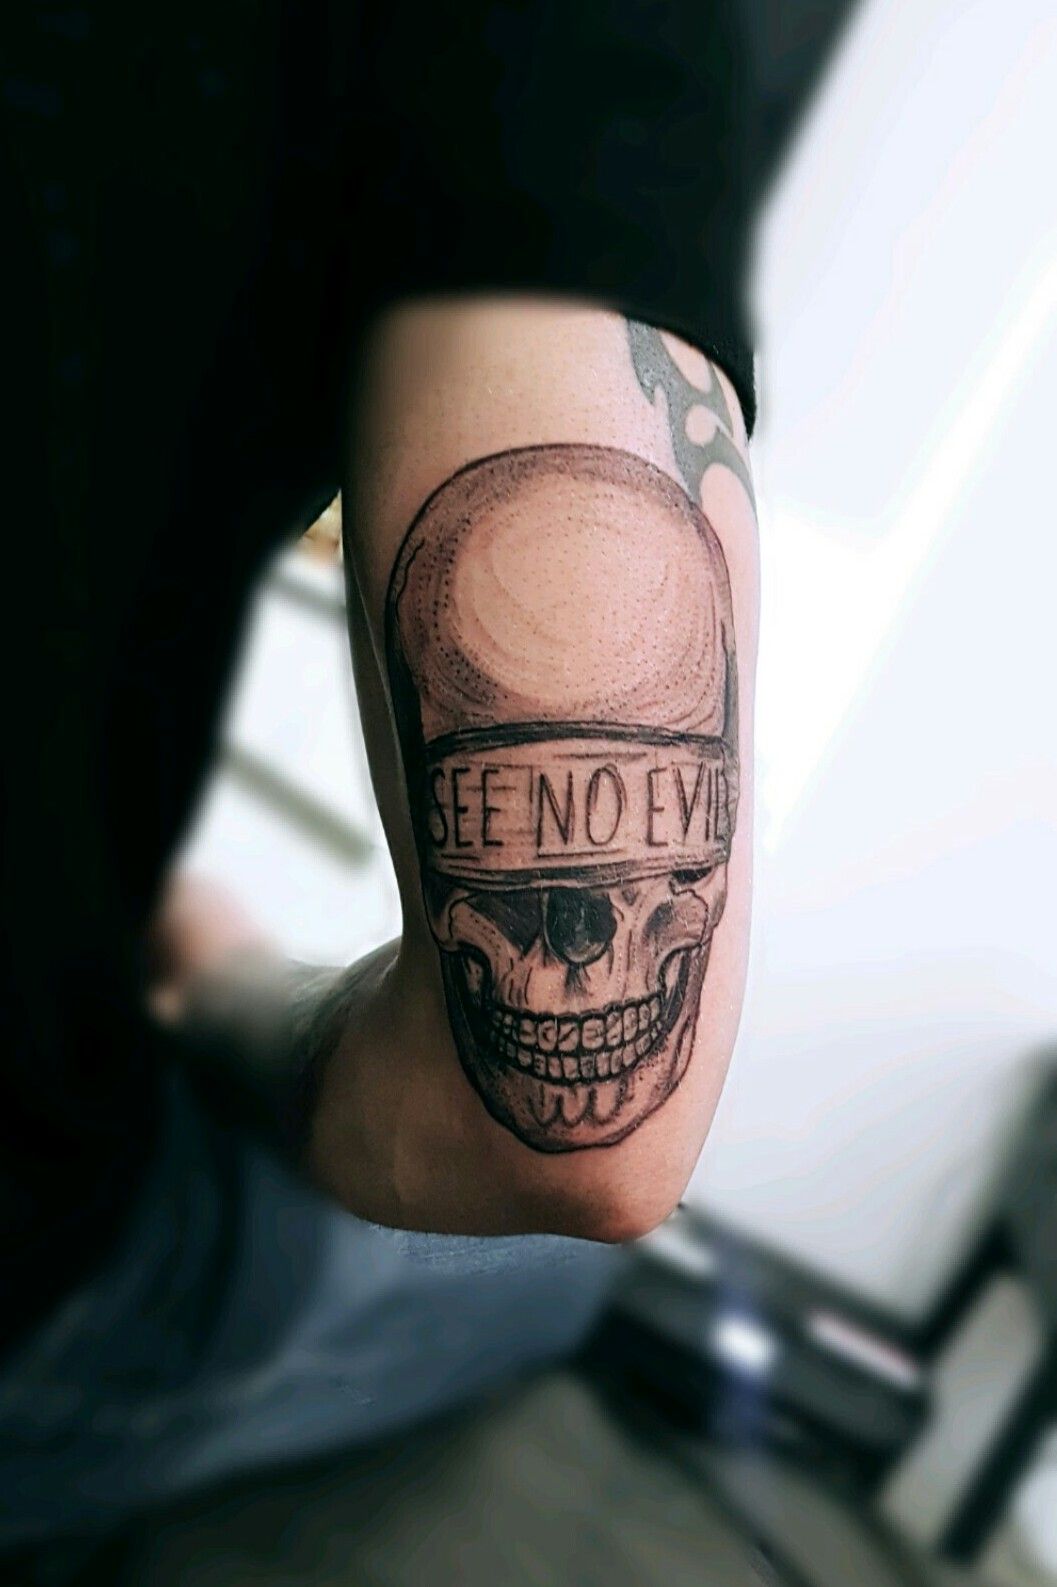 Tattoo uploaded by Alessia Alessandra  See No Evil  Great message   Tattoodo